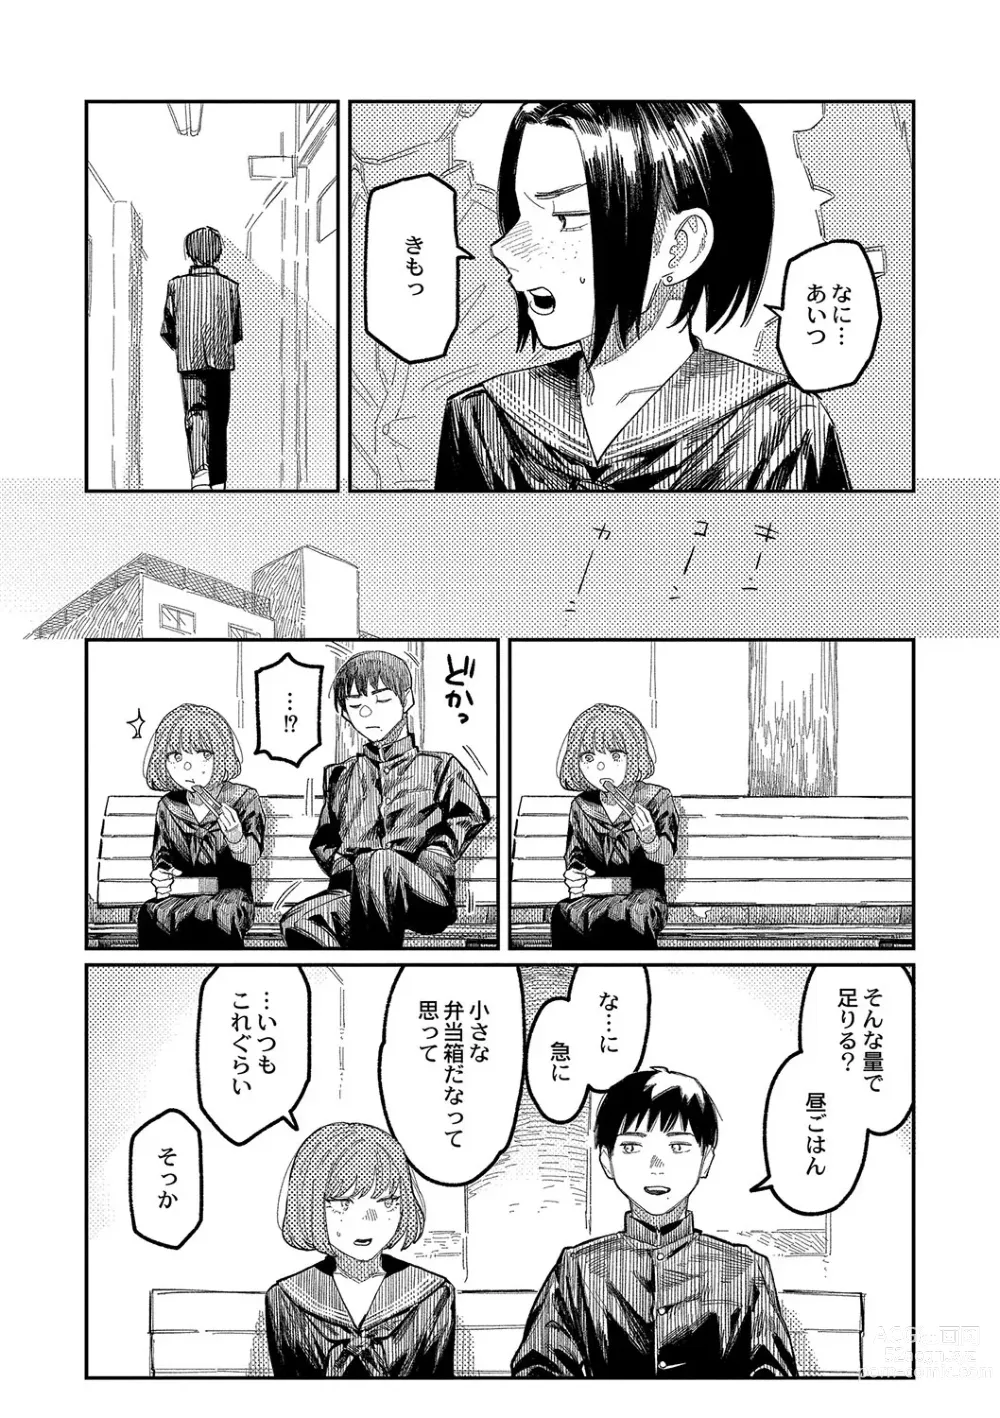 Page 10 of manga Oyasumi, Teen - Good Night, Goodbye